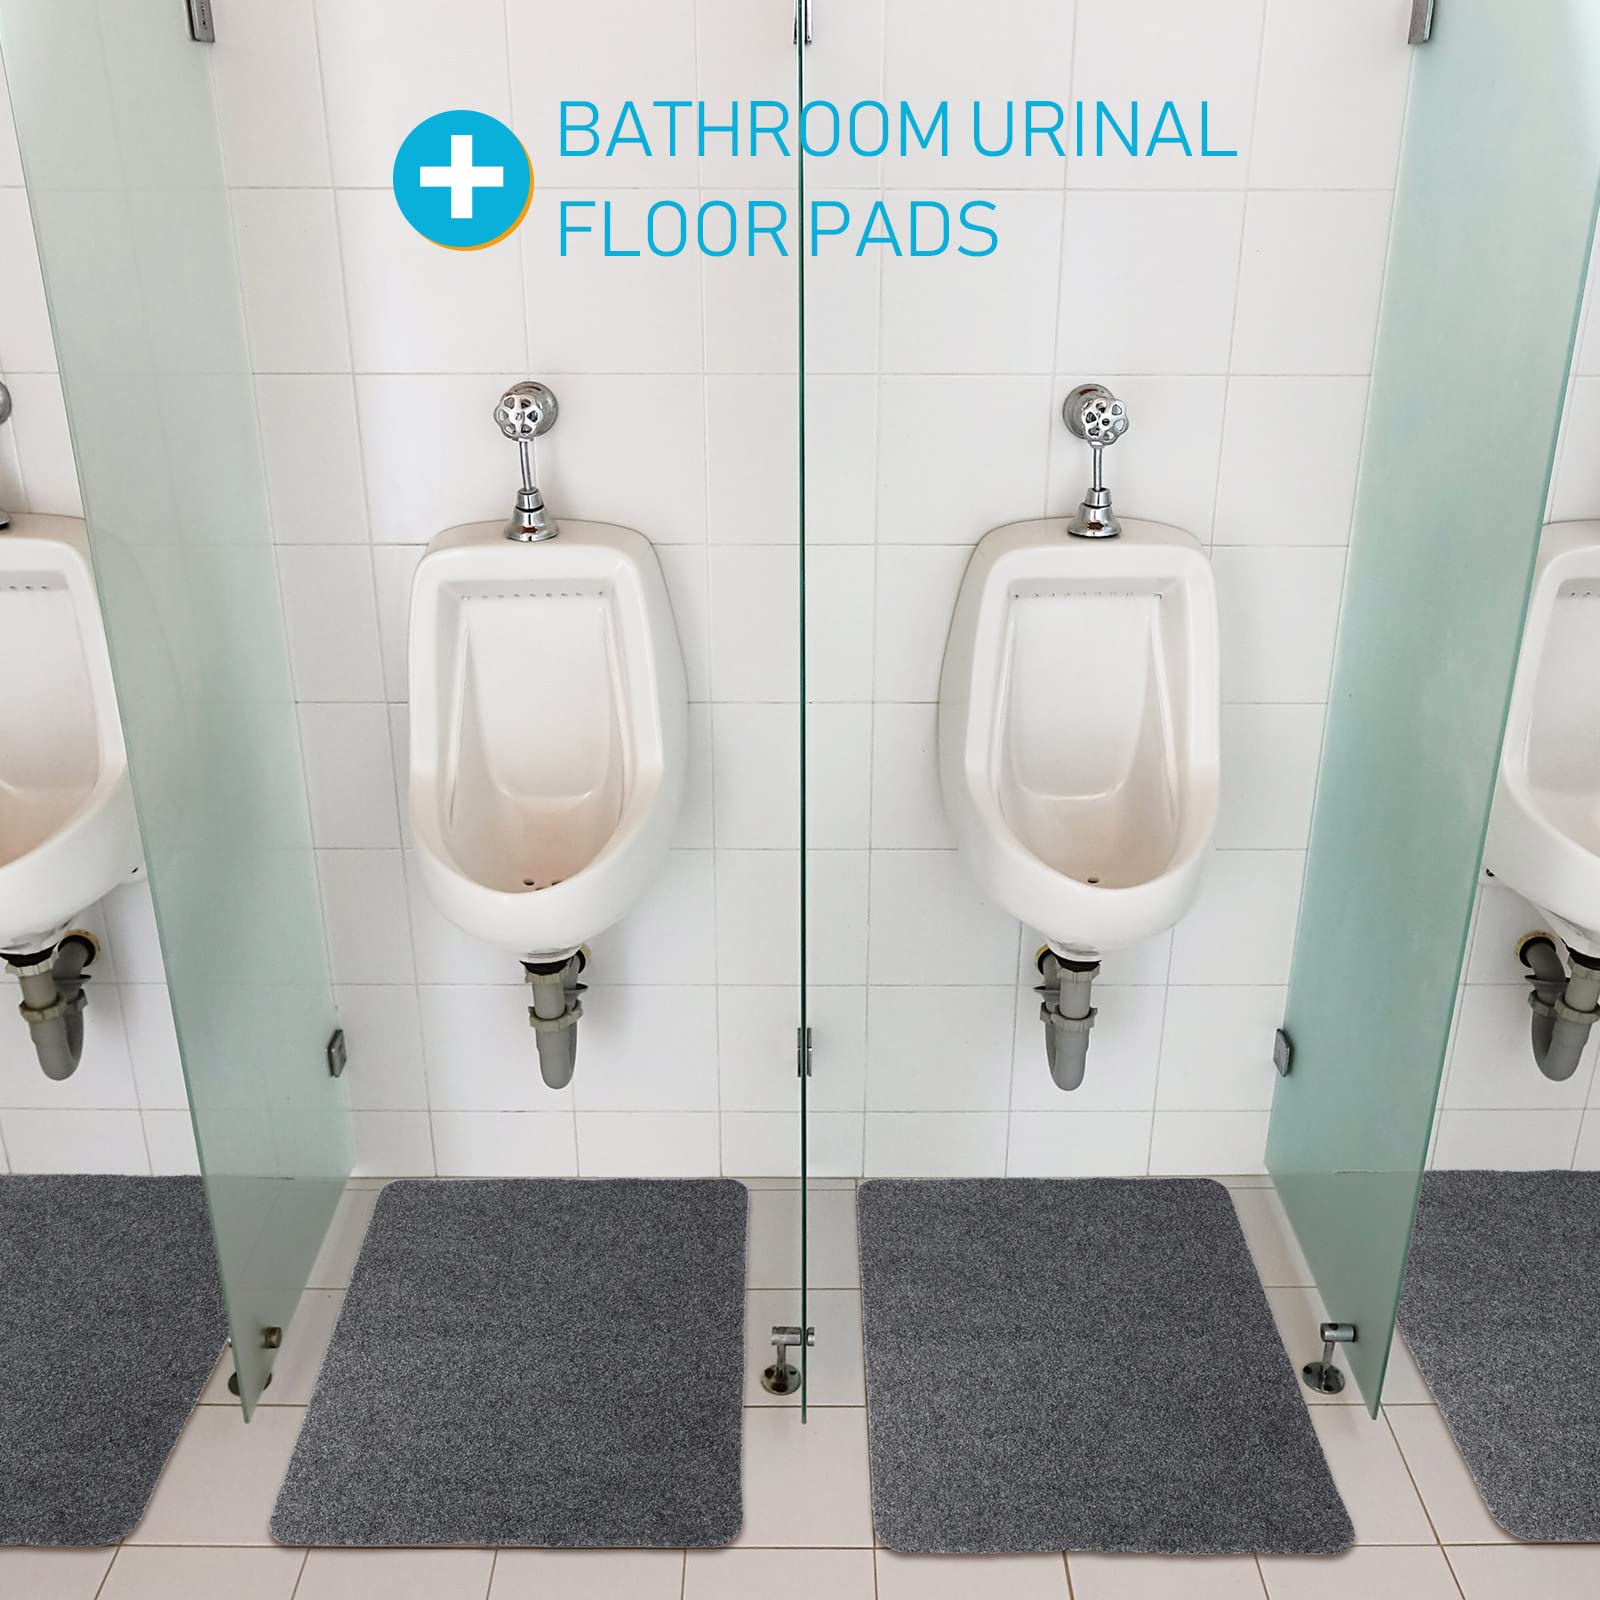 Nuanchu 6 Pcs Nonslip Urinal Mats Urinal Floor Mats Water Absorption Urinal Mat Bathroom Urinal Floor Pad for Men Bathroom Restroom (Gray)